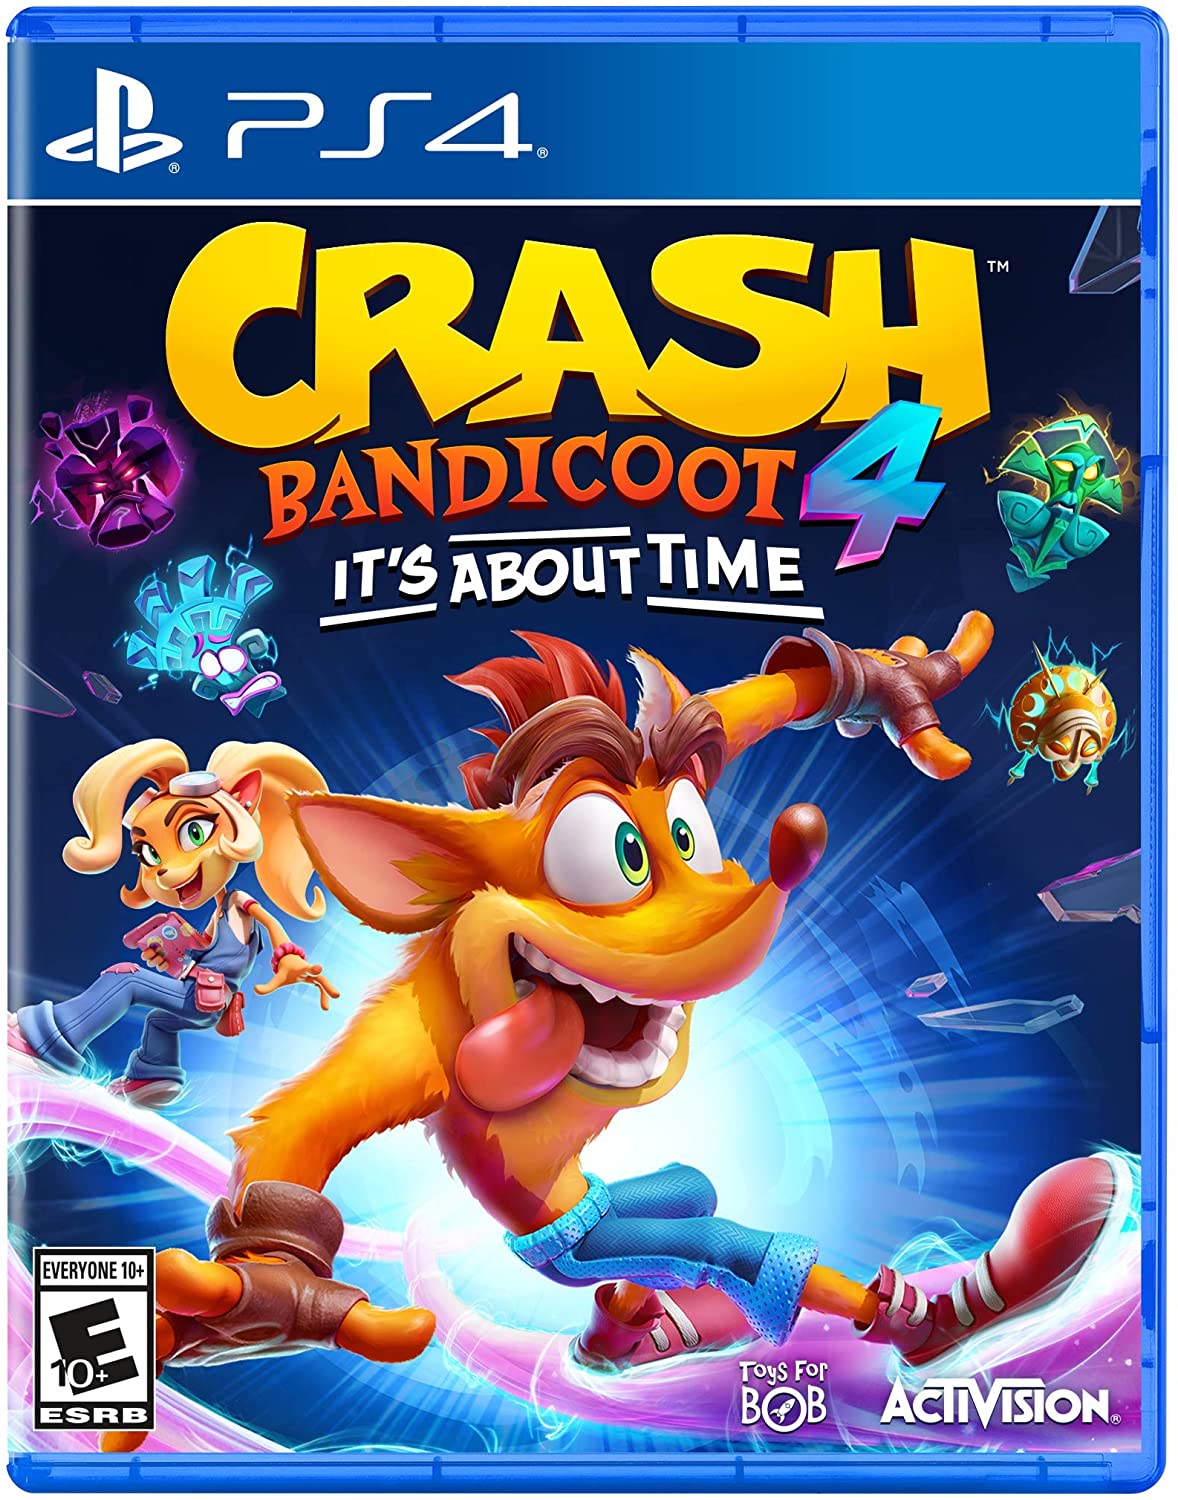 Crash Bandicoot 4 Boxart